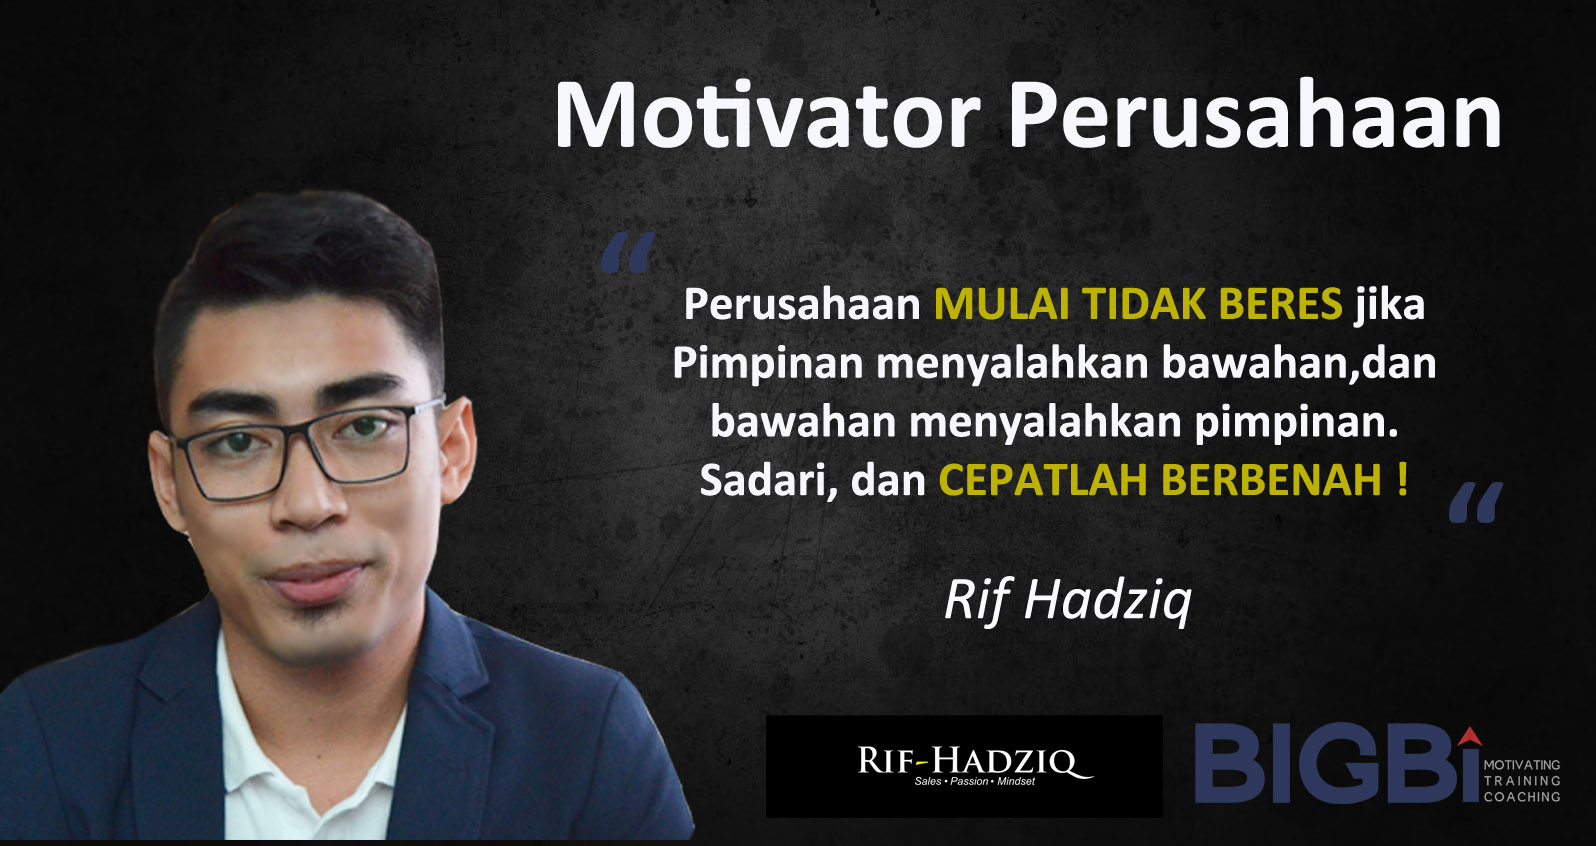 motivator indonesia, motivator perusahaan, motivator indonesia muda, rif hadziq, training motivasi,